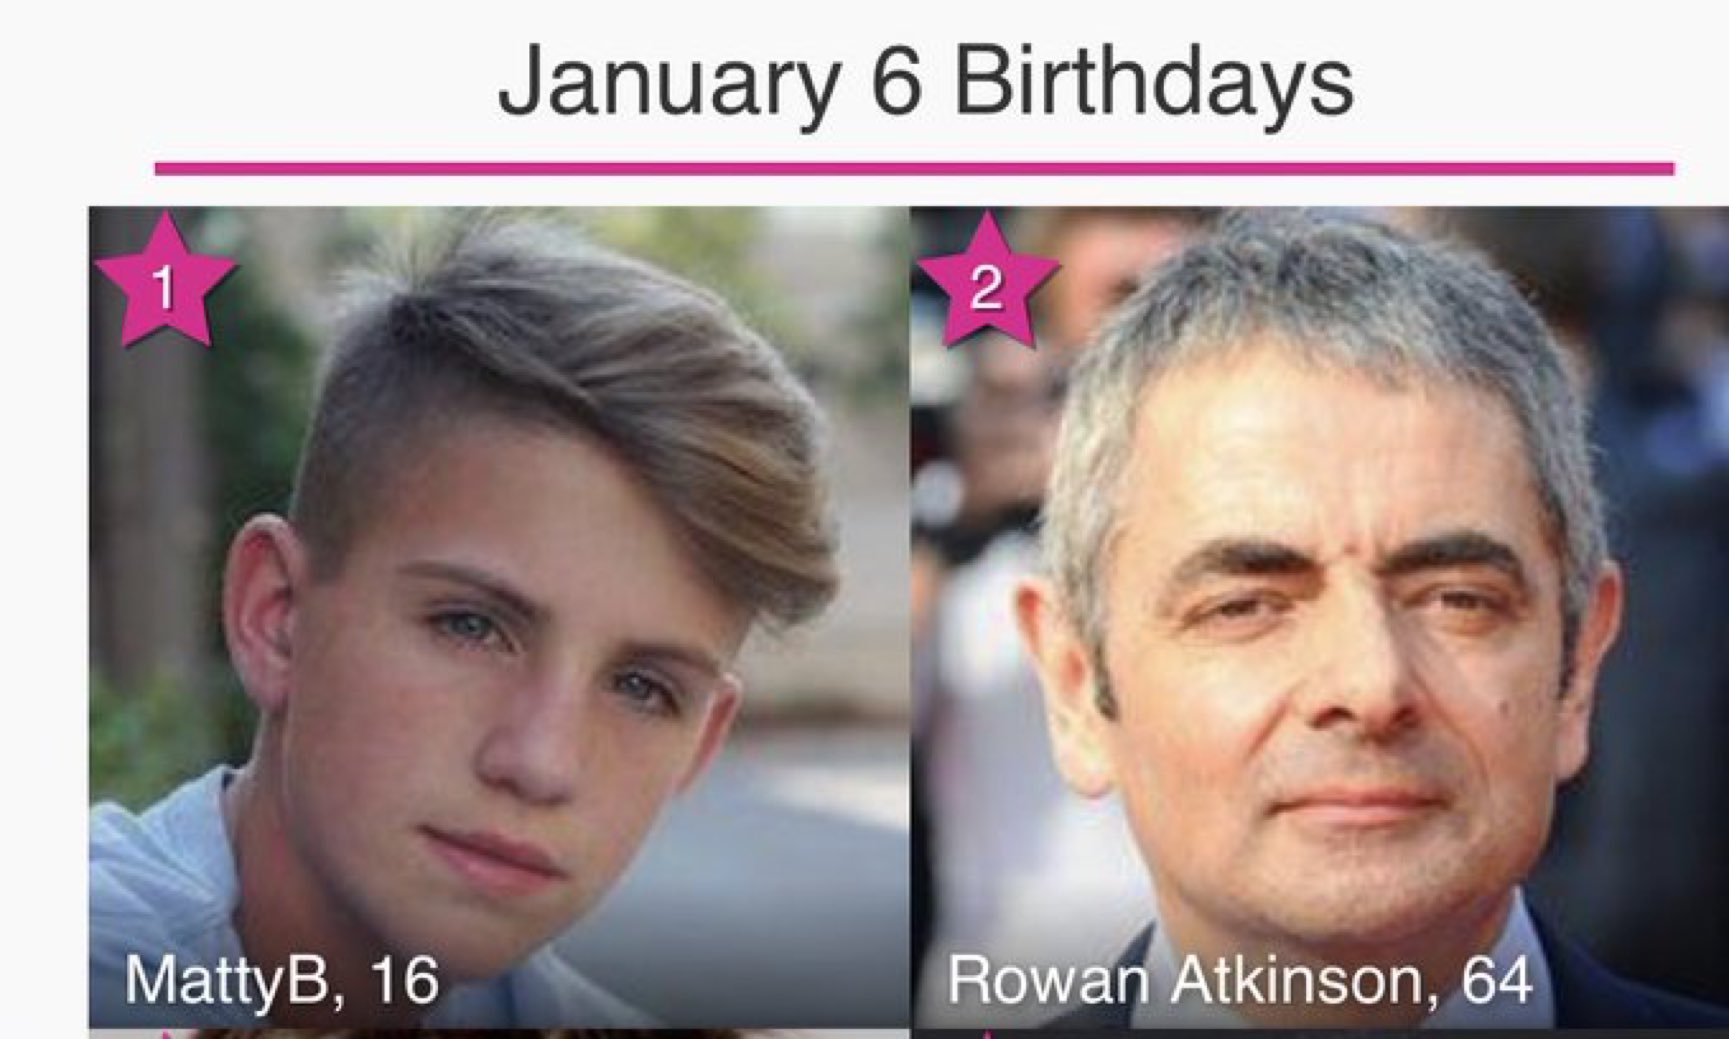 Happy Birthday to MattyBRaps and Rowan Atkinson 